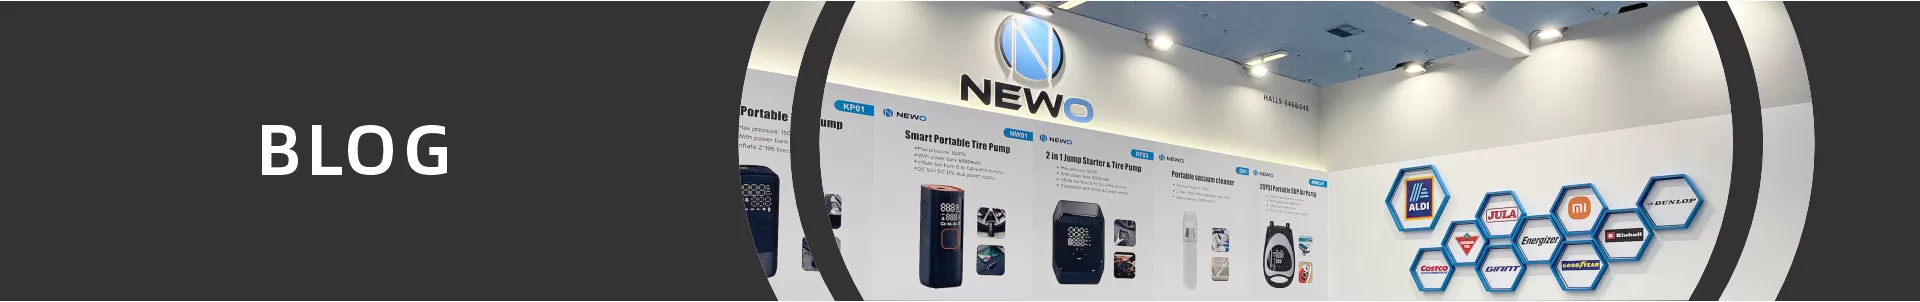 Smartnewo showcases its innovative range of electric air pumps at IFA 2023